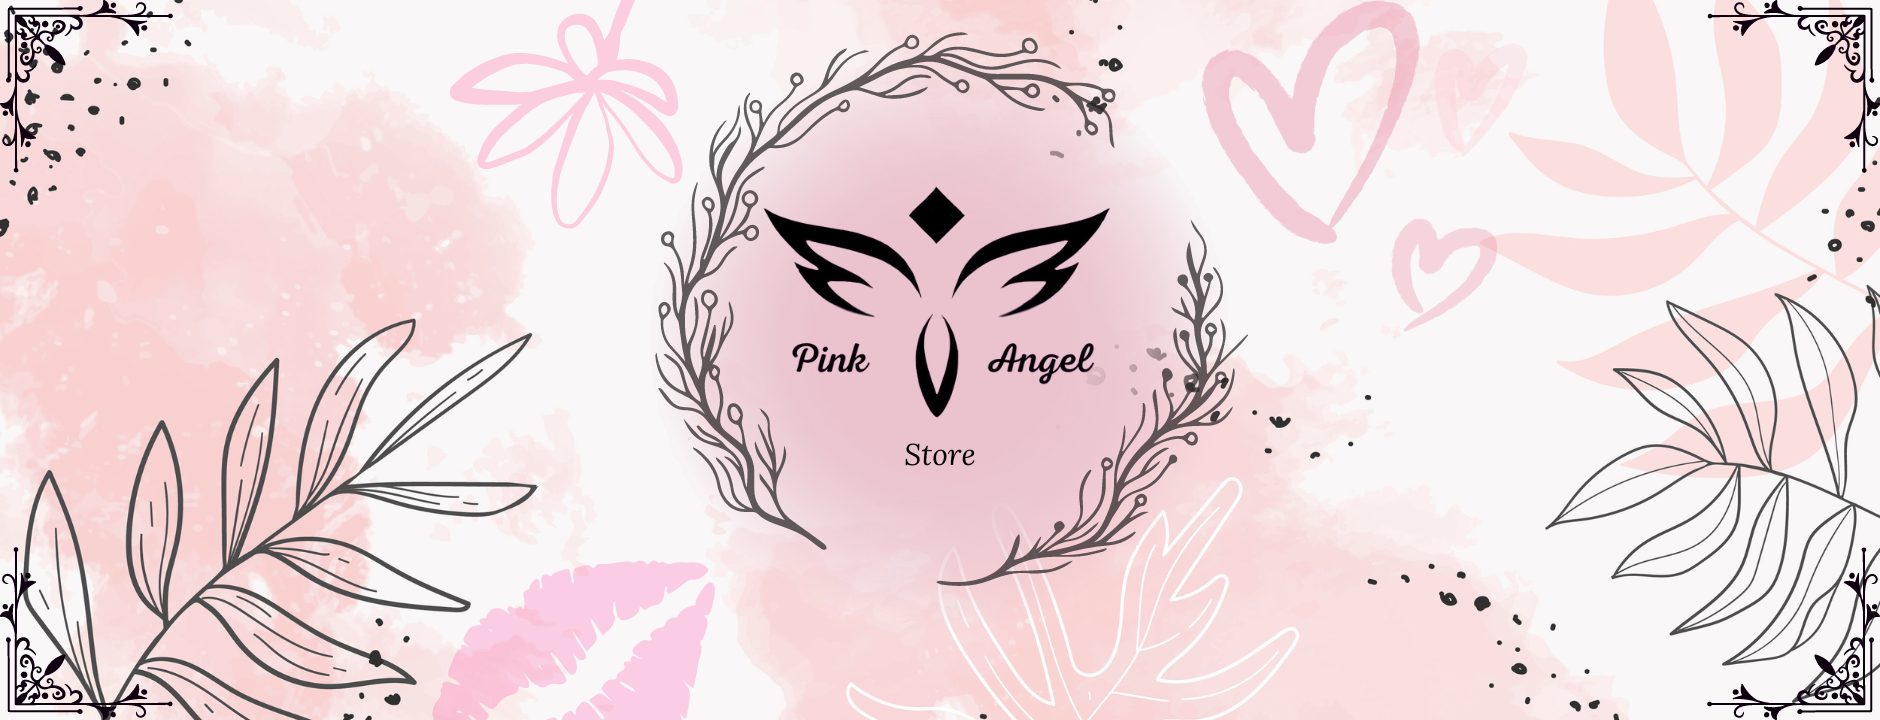 Pink Angel Store